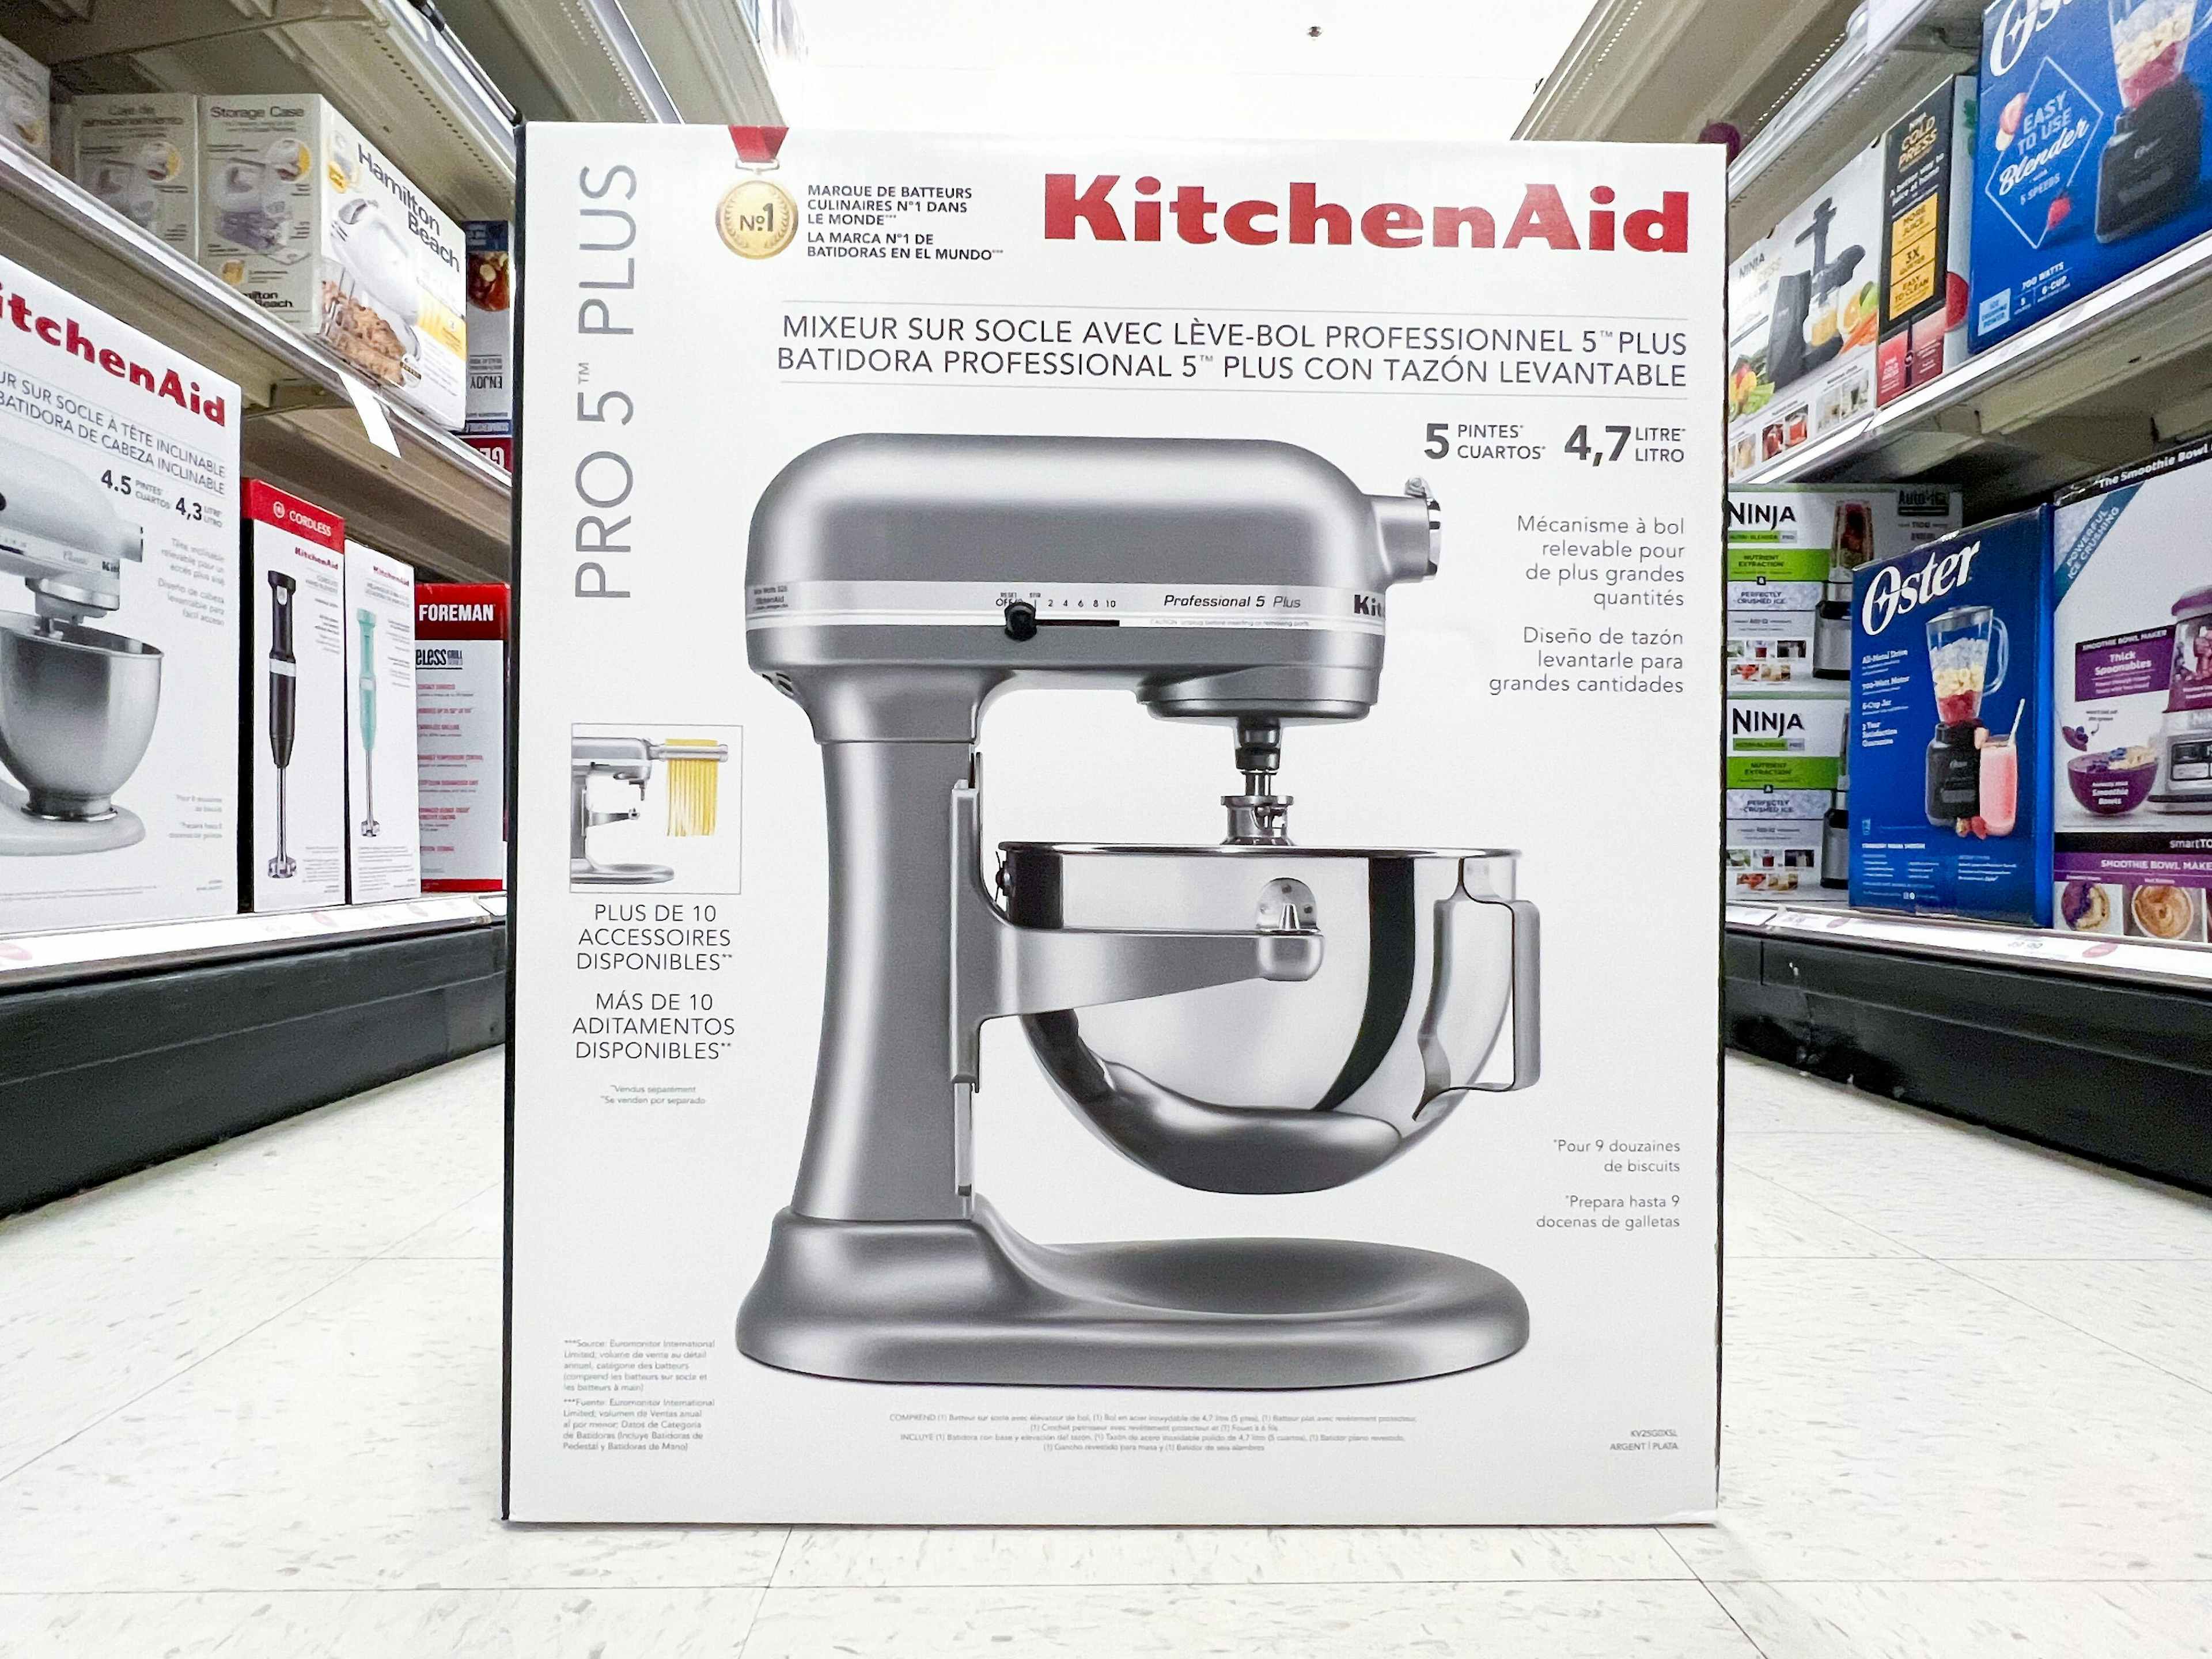 kitchenaid-pro-5-stand-mixer-target-2022 (2)